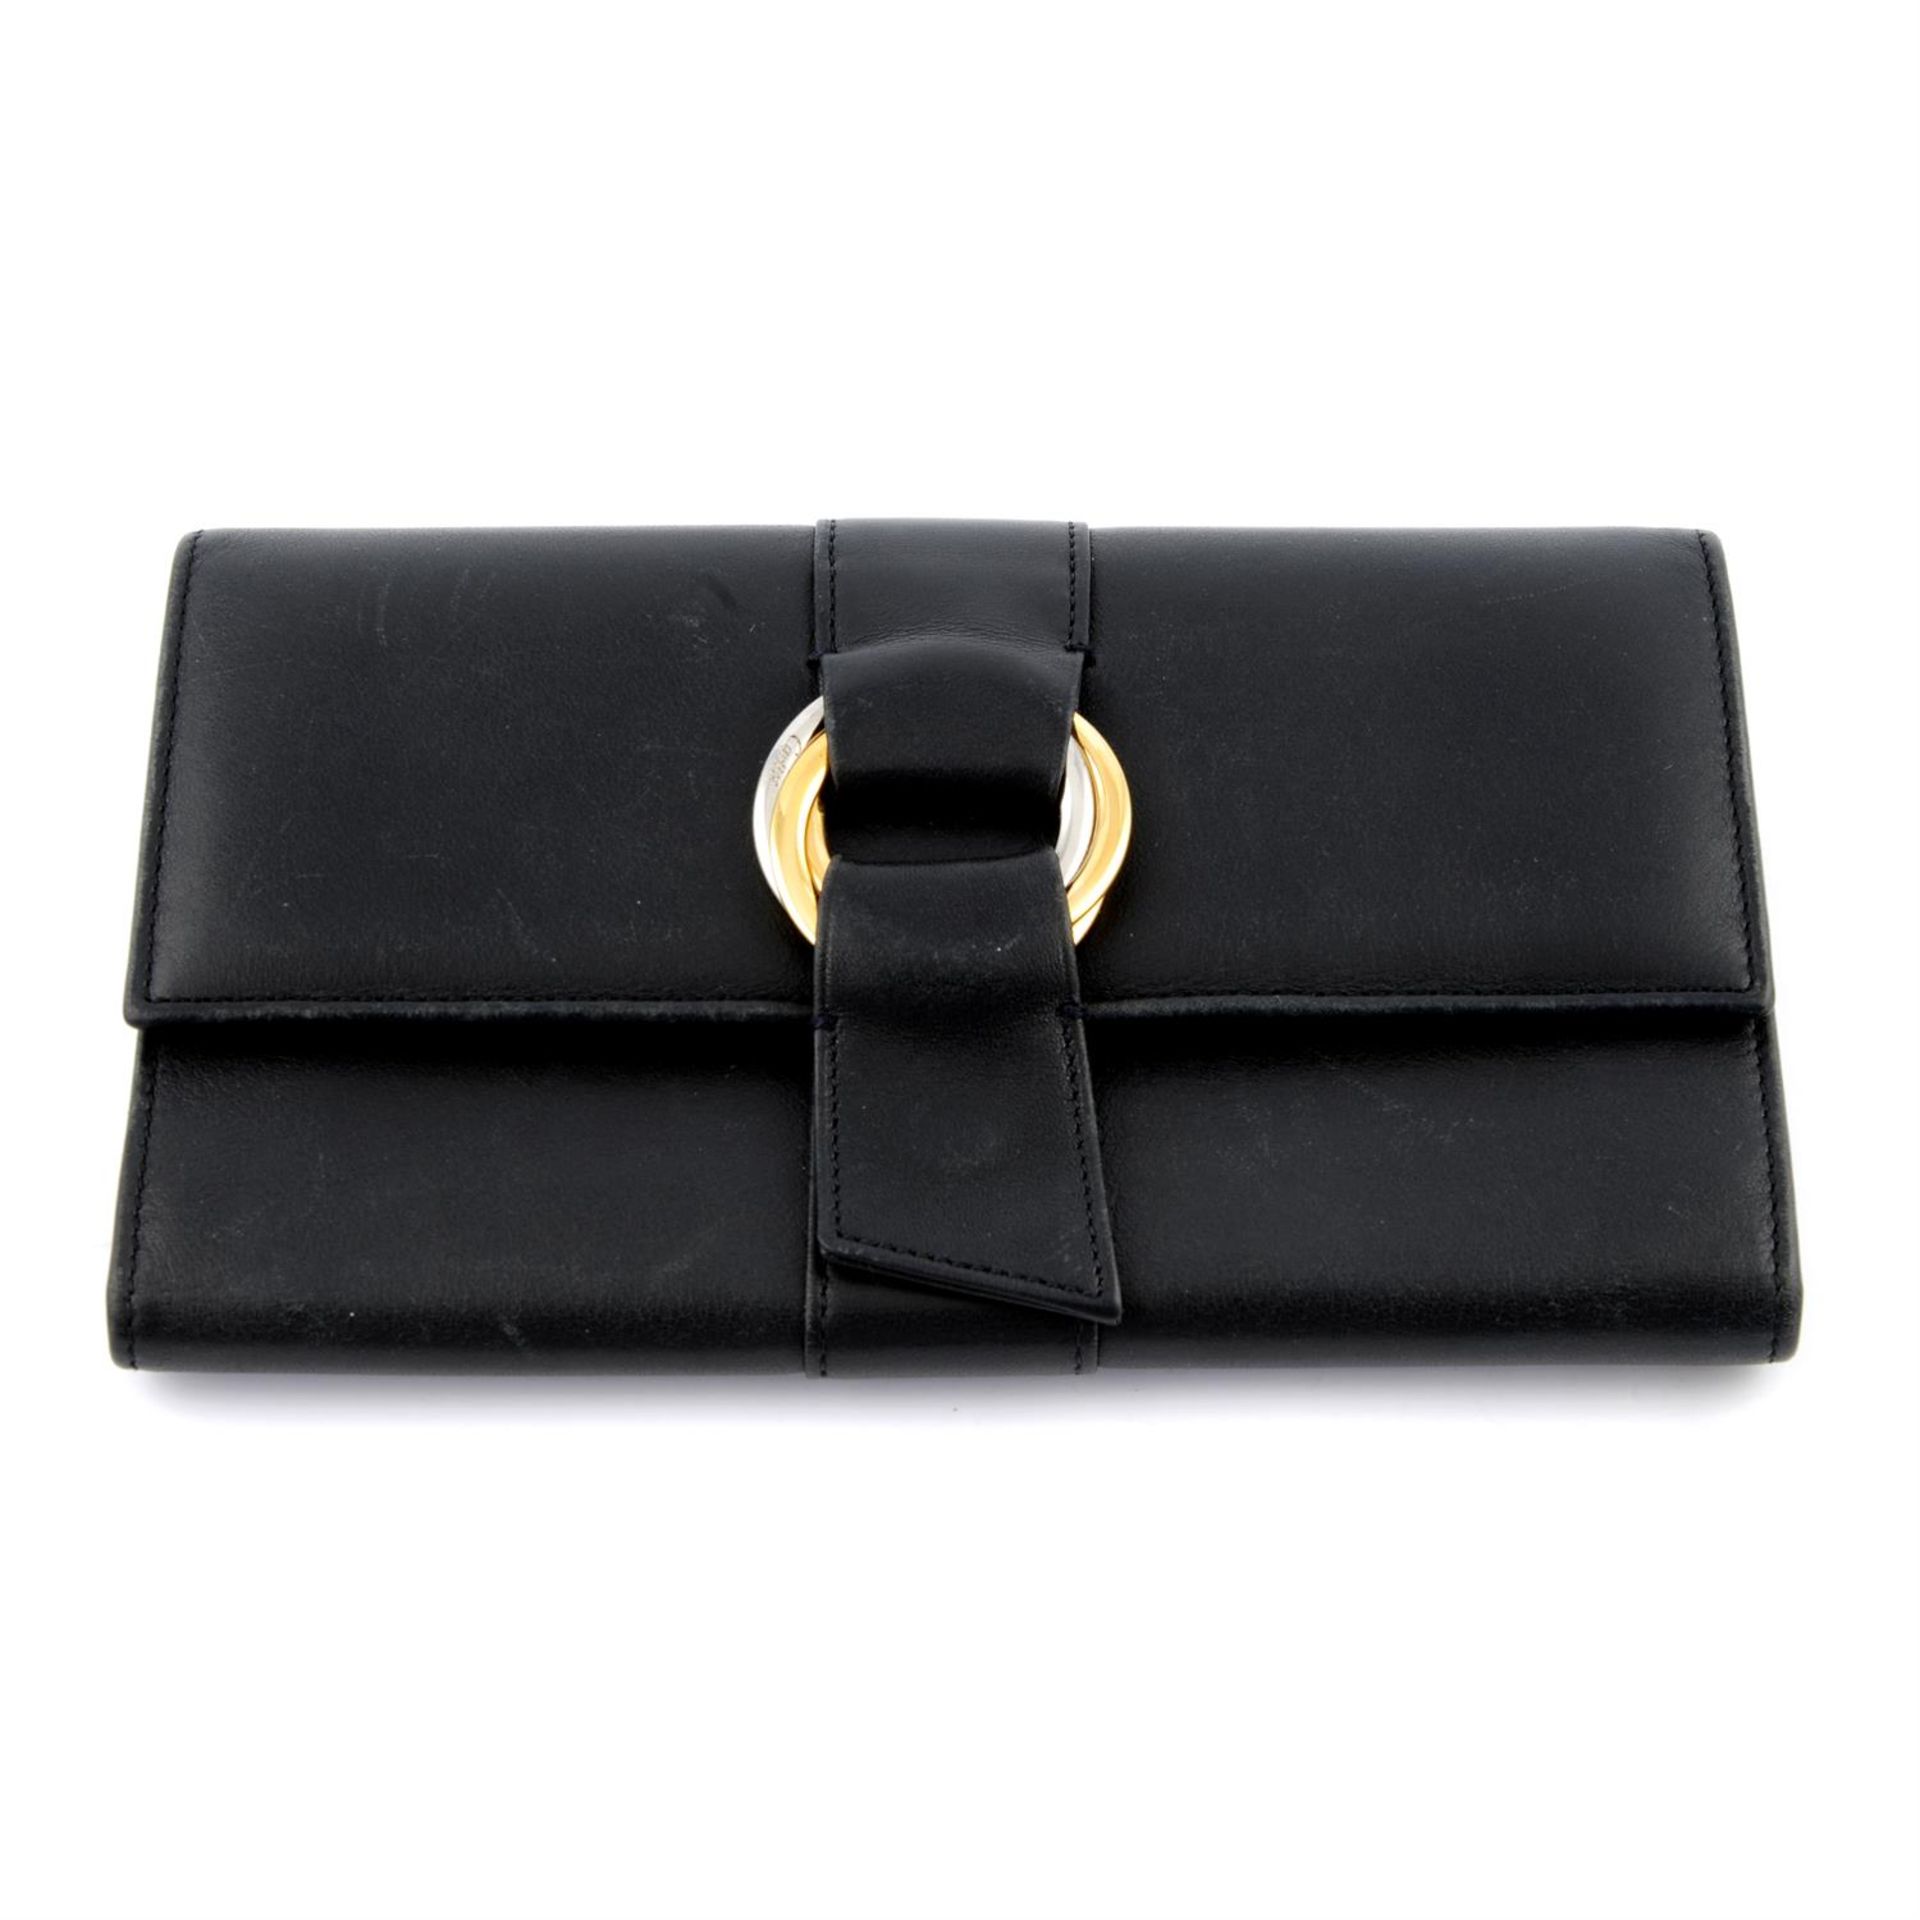 CARTIER - a black leather tri fold Trinity wallet.